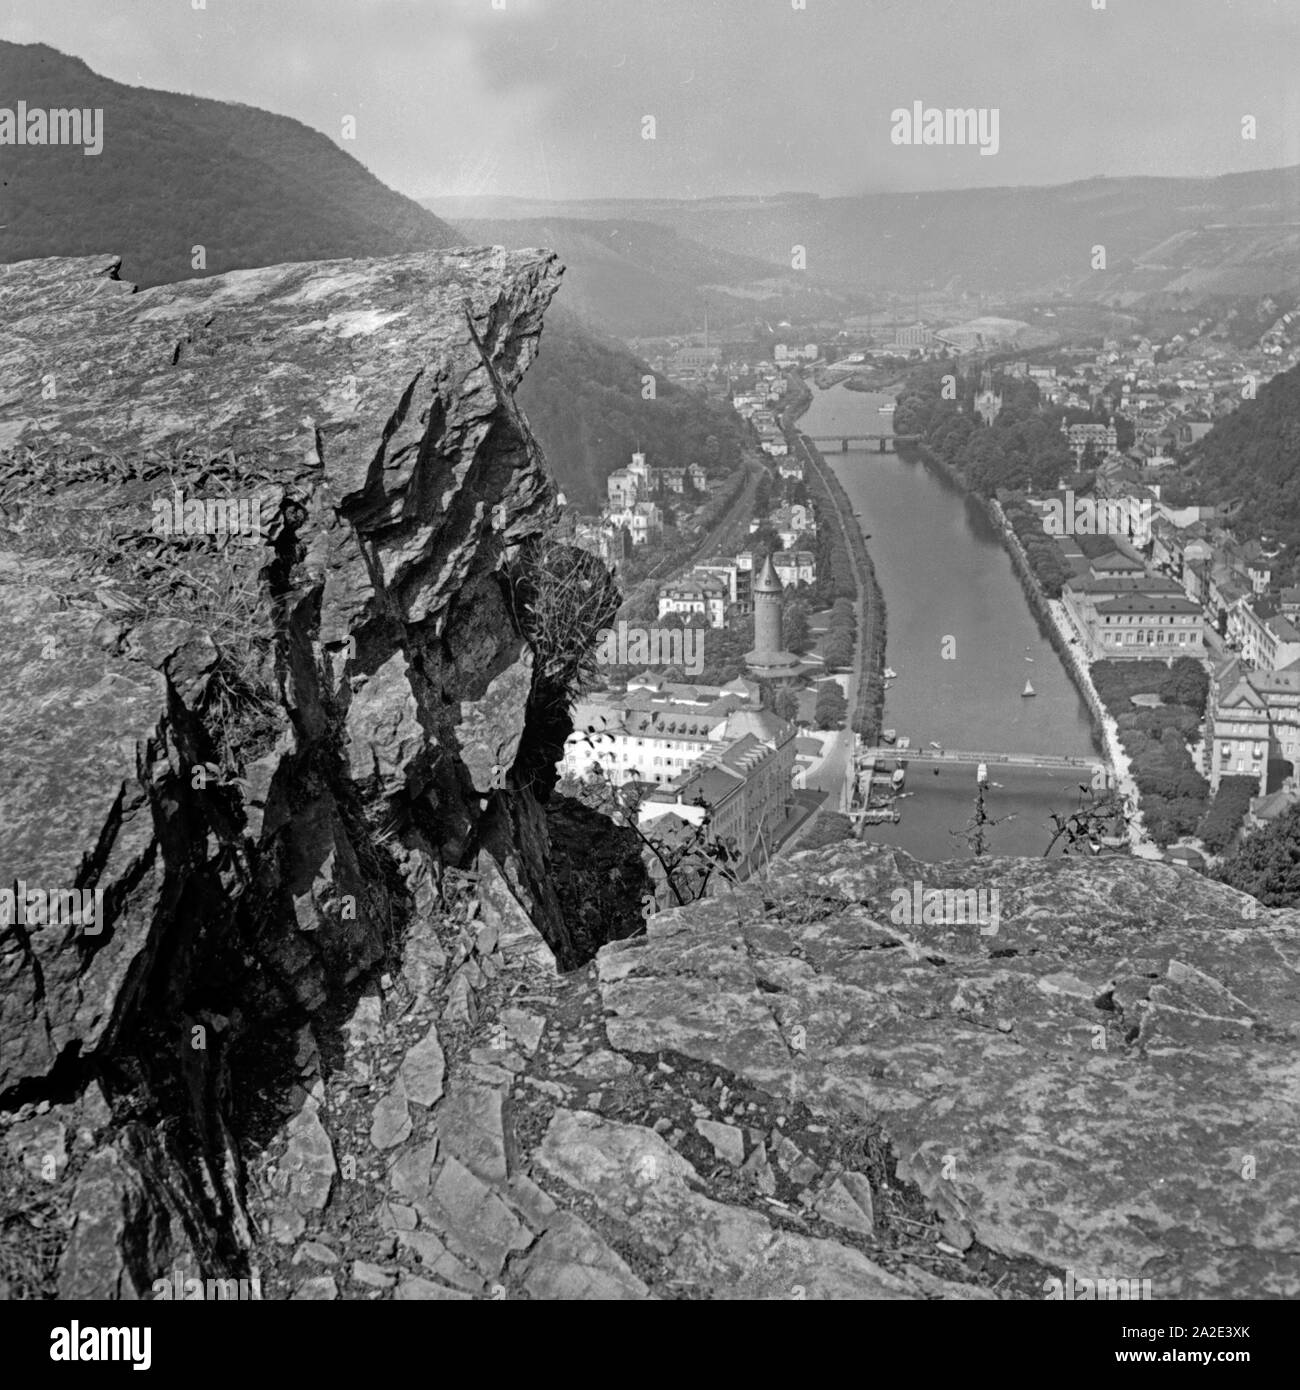 Blick auf die Kurstadt Bad Ems an der Lahn, Deutschland 1930 er Jahre. Vue de station thermale de Bad Ems et la rivière Lahn, Allemagne 1930. Banque D'Images